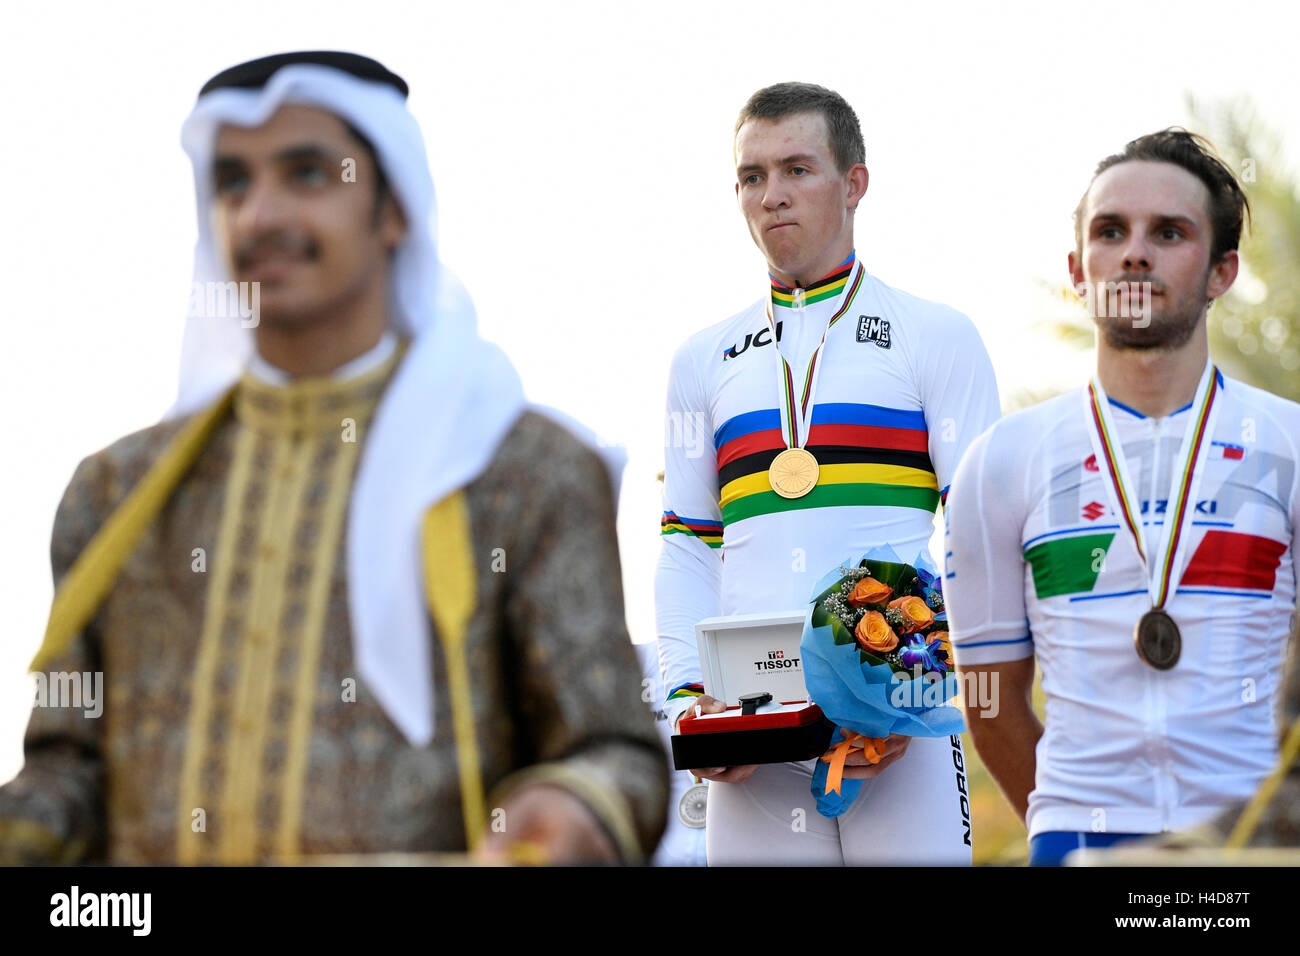 Norwegian Kristoffer Halvorsen and Italian Jakub Mareczko pictured on the podium after the men's under 23 road race at the 2016 UCI World Road World Cycling Championships in Doha, Qatar, Thursday 13 October 2016. BELGA PHOTO YORICK JANSENS Stock Photo